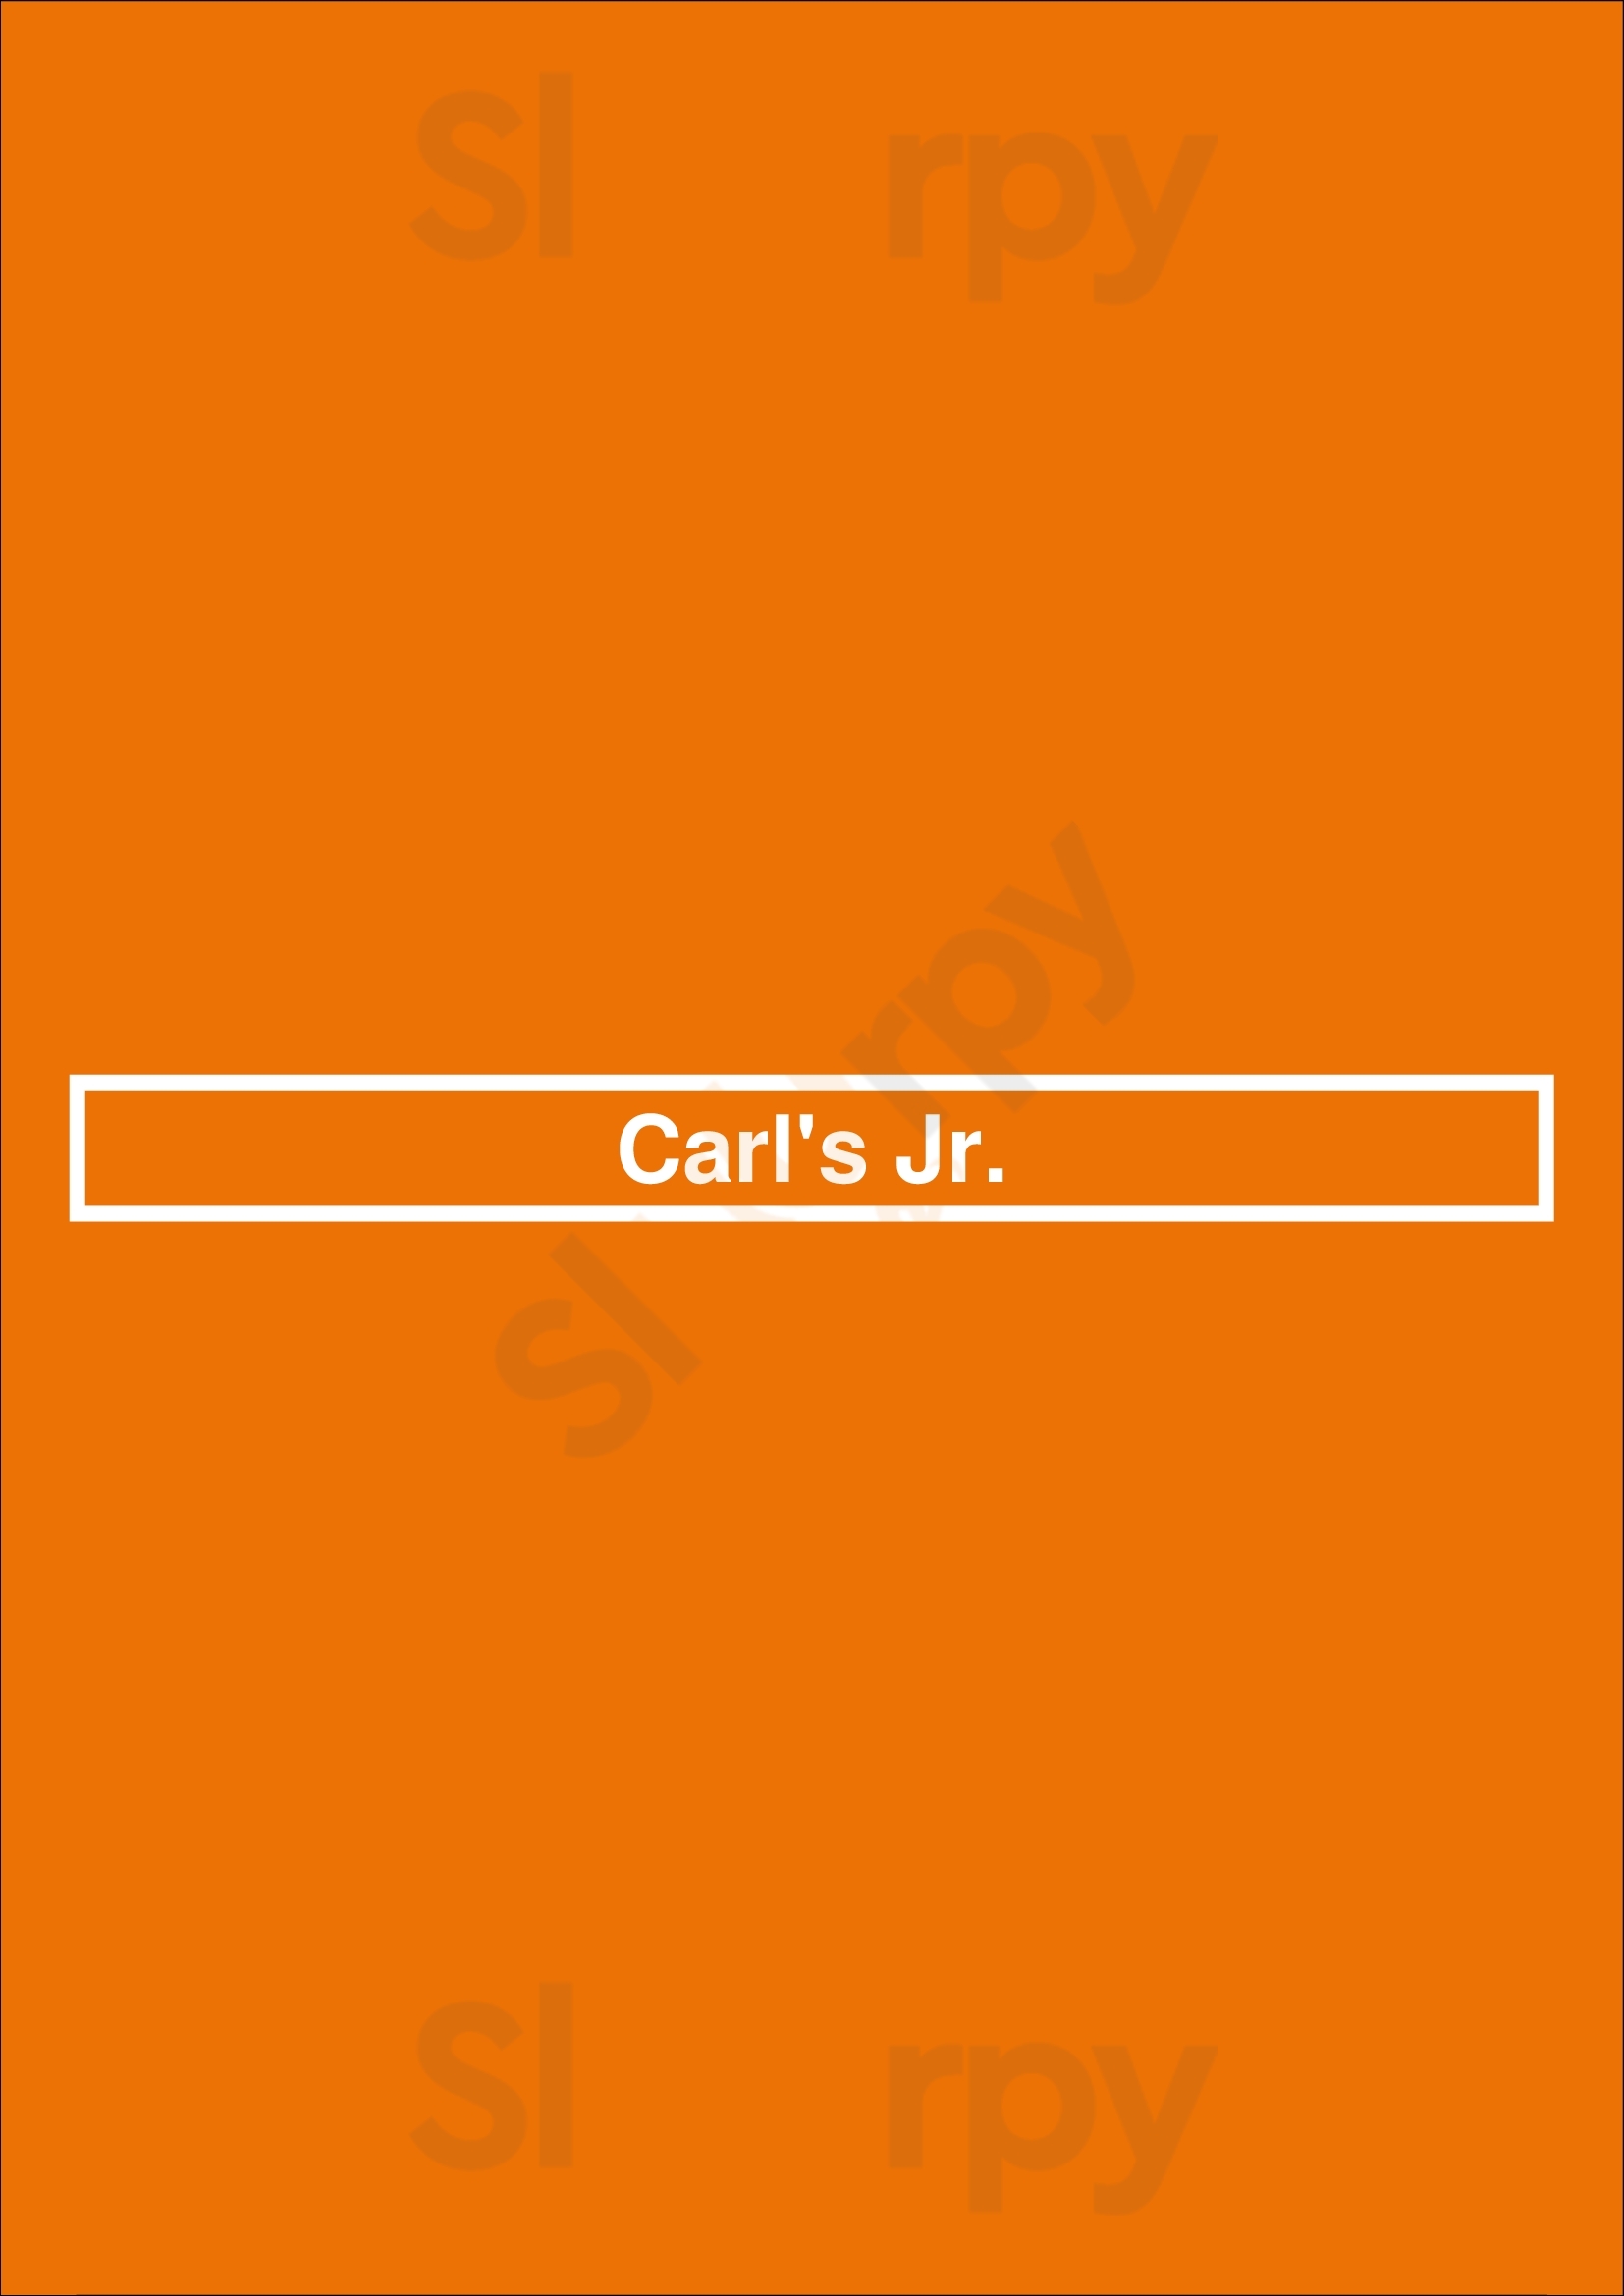 Carl's Jr. Henderson Menu - 1